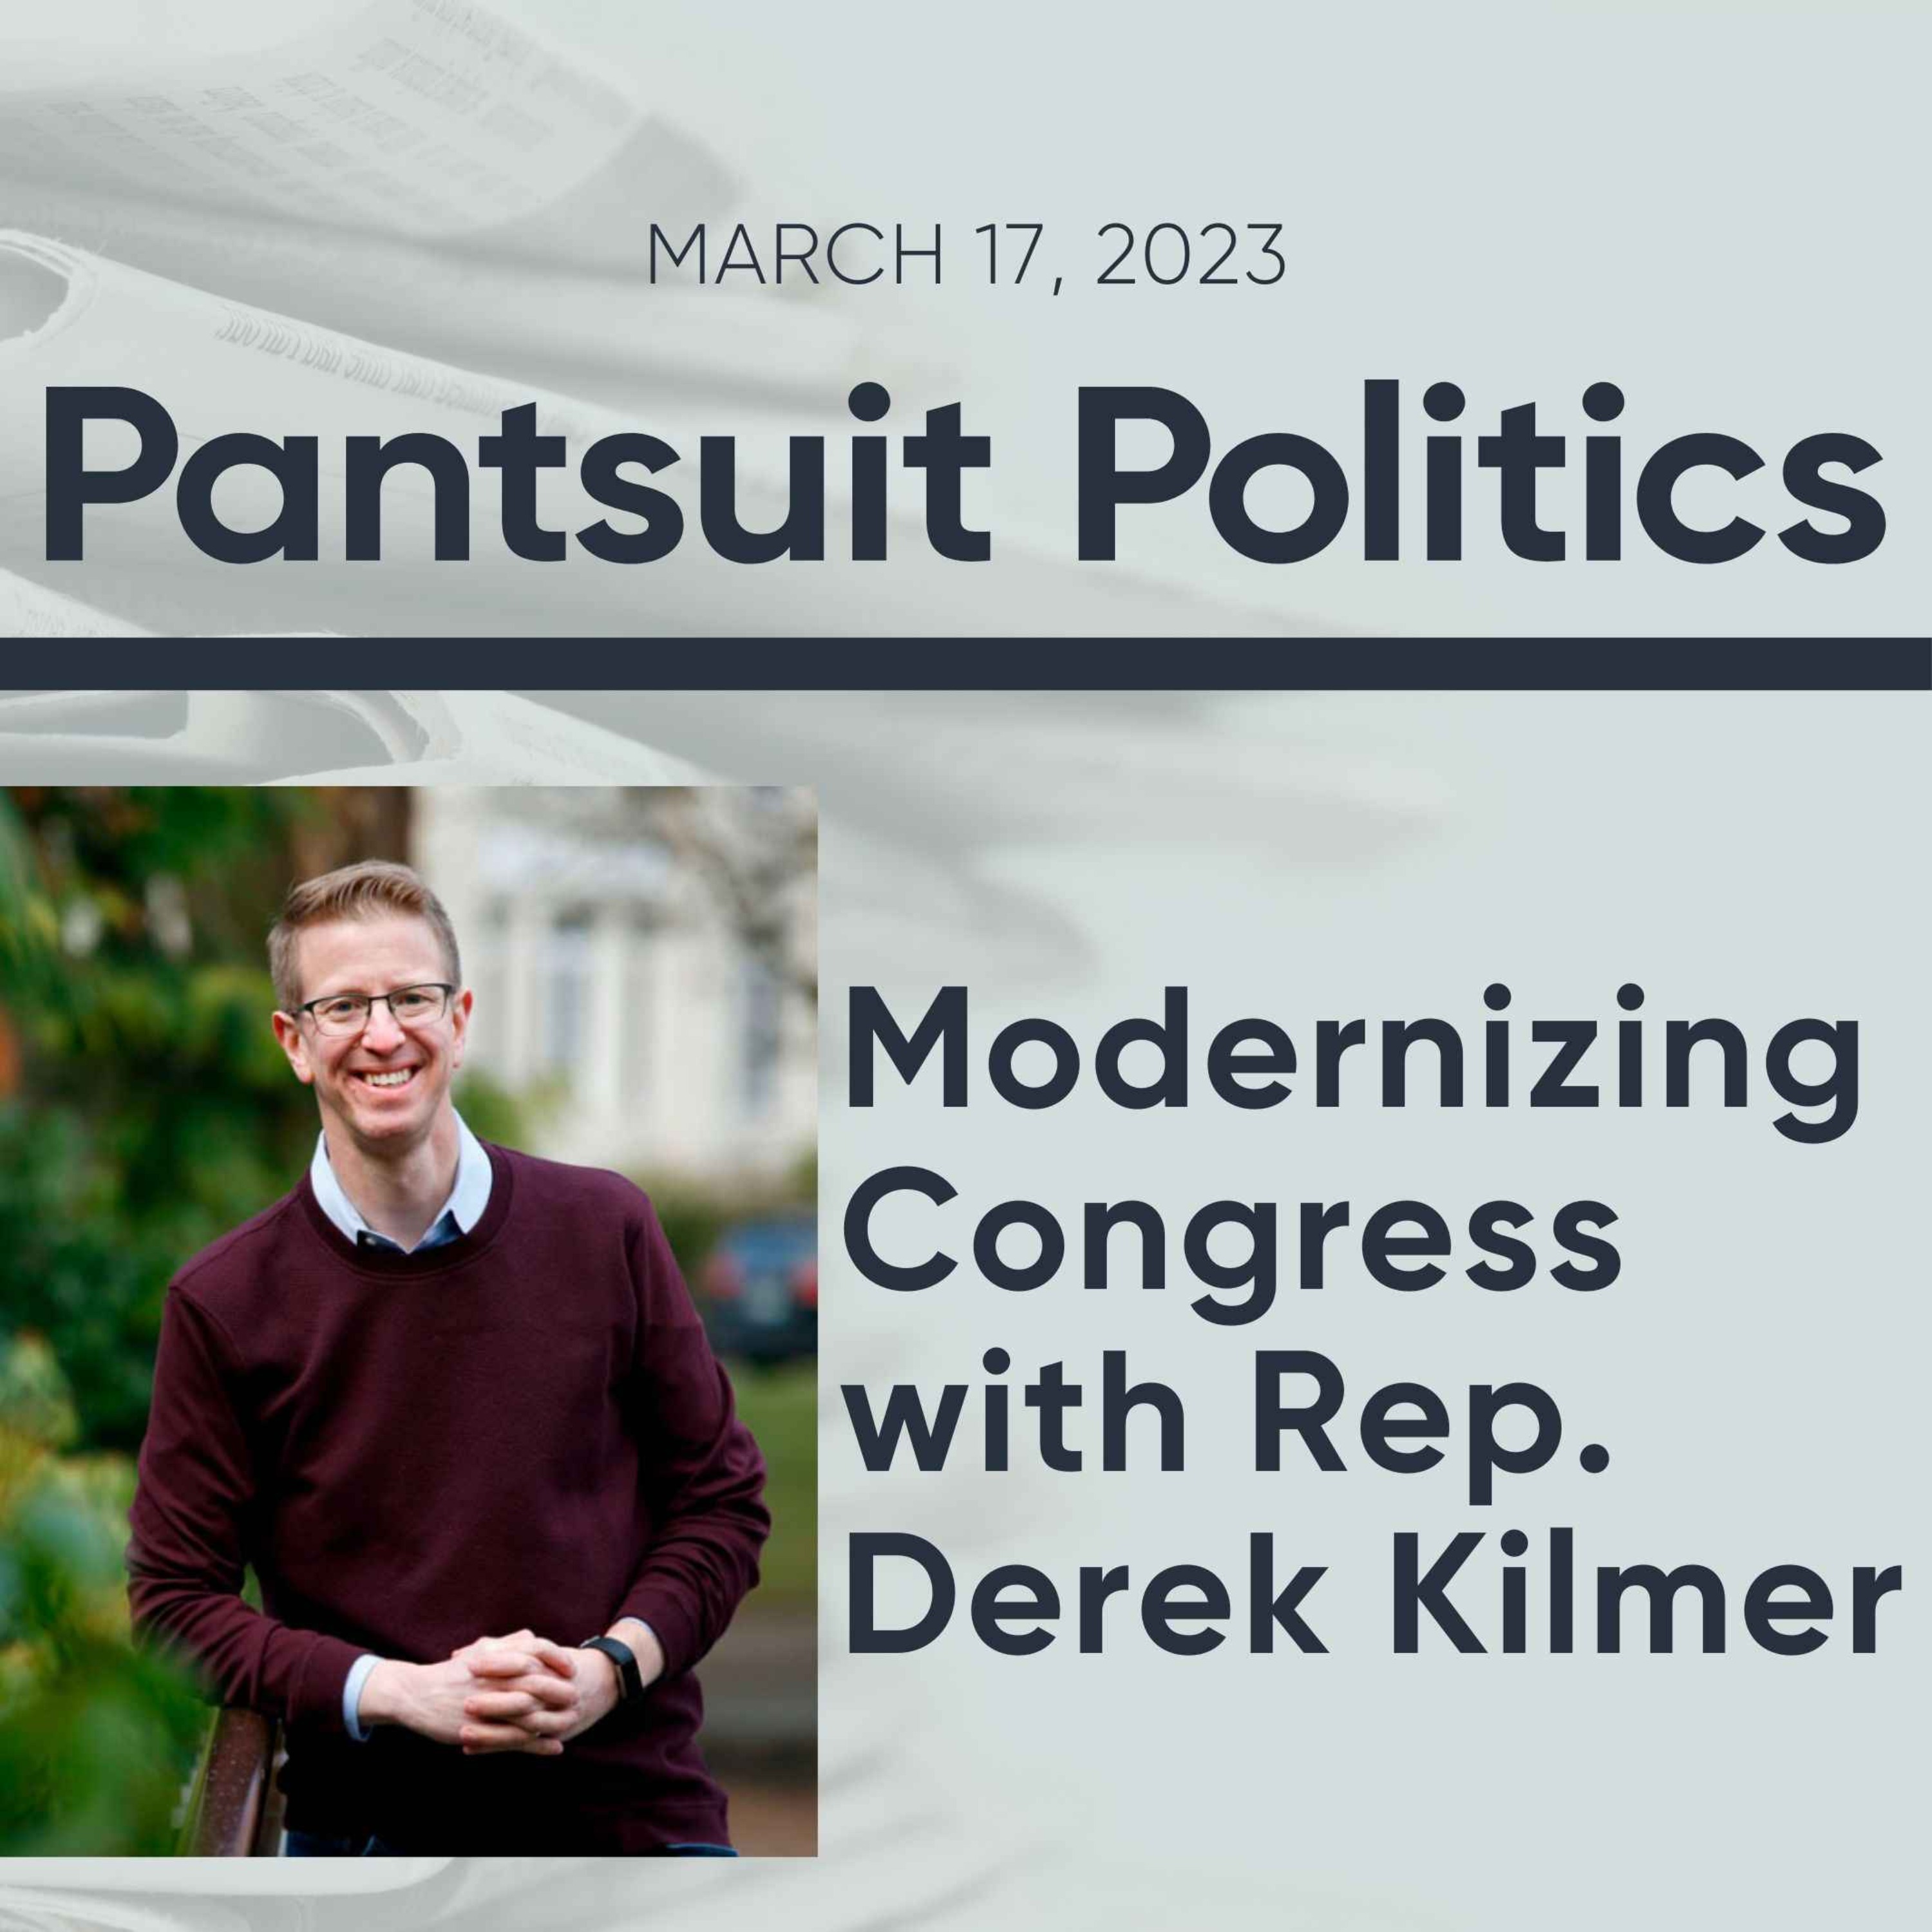 Modernizing Congress with Rep. Derek Kilmer